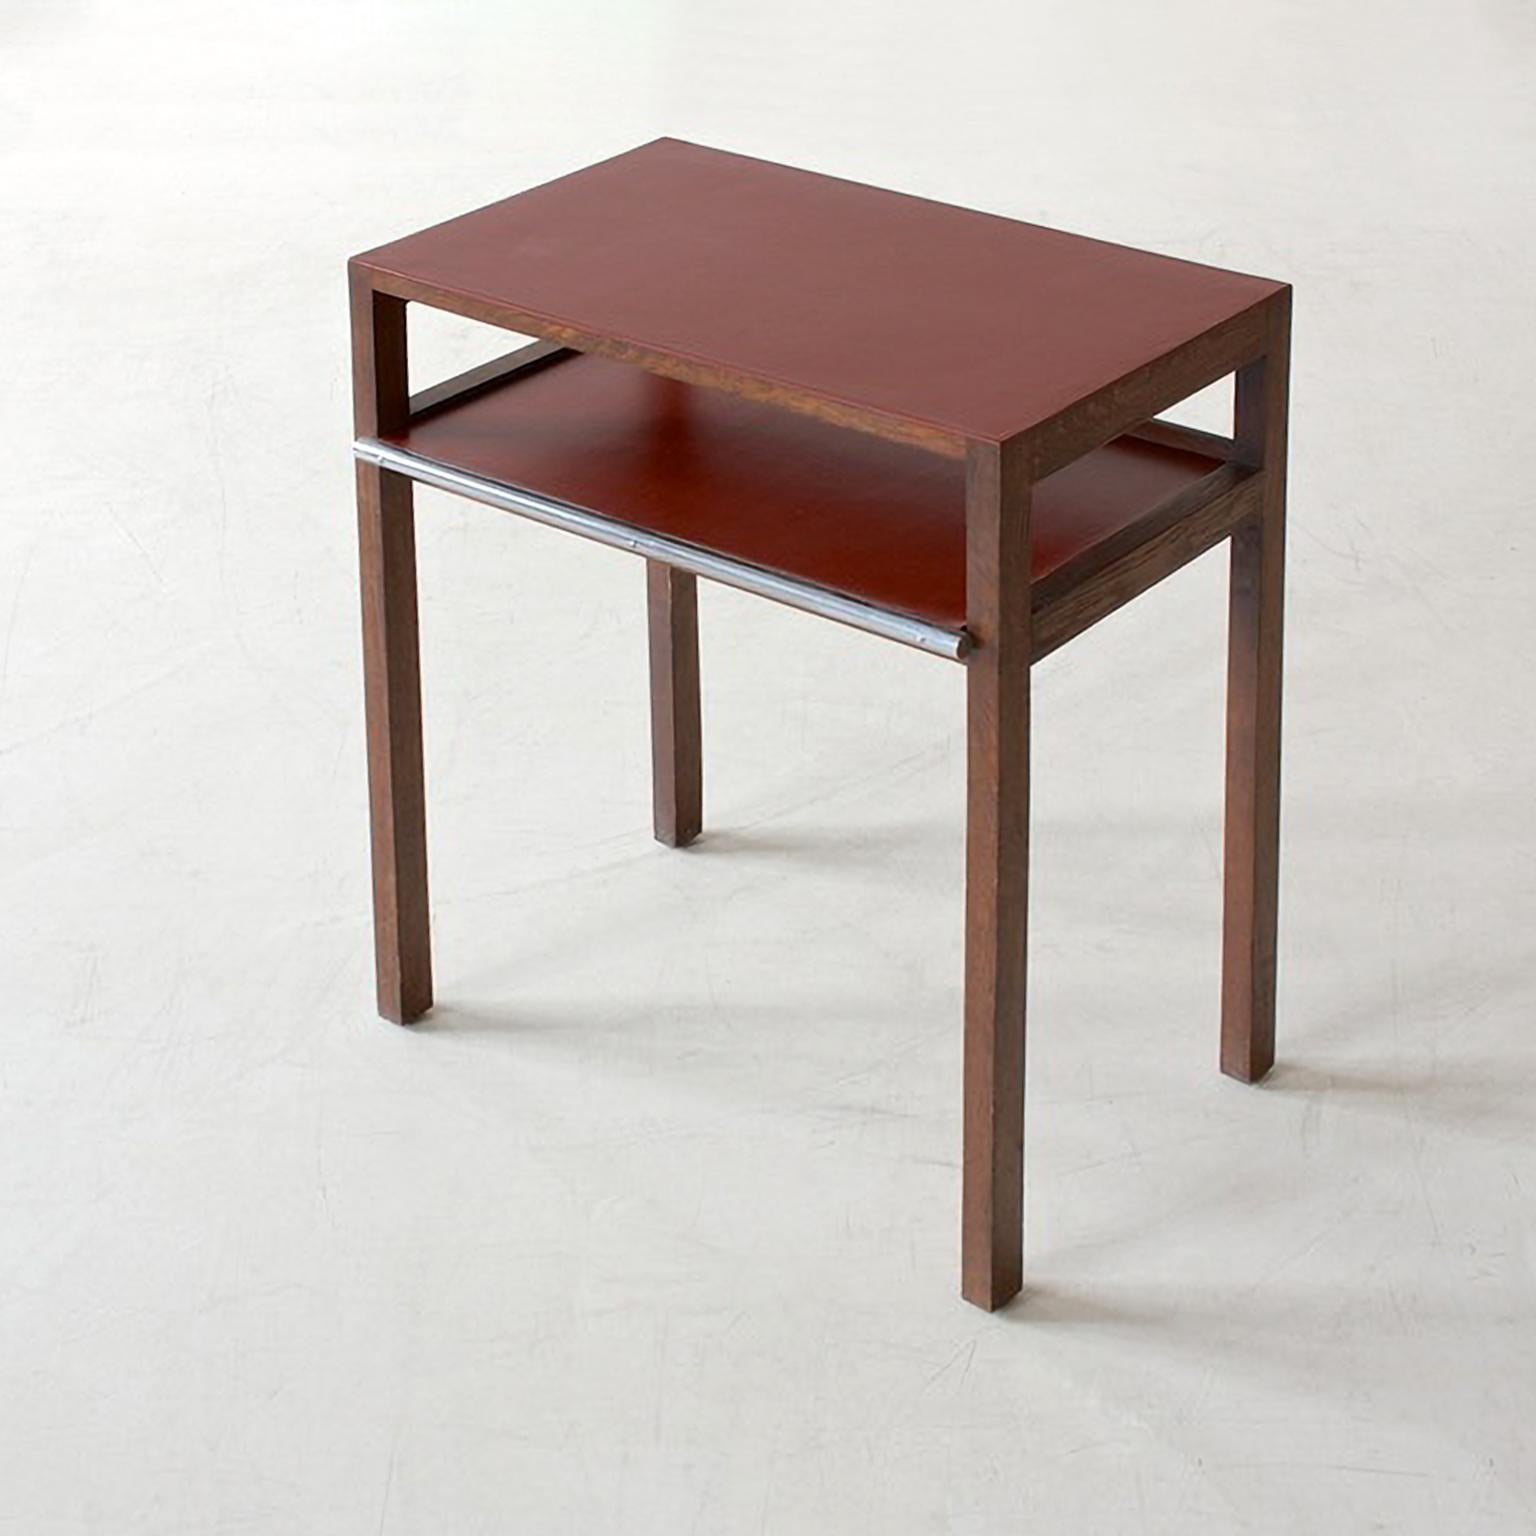 Bauhaus Modernist Side Table by Jindrich Halabala, Stained Oak Wood, Linoleum, 1930 For Sale